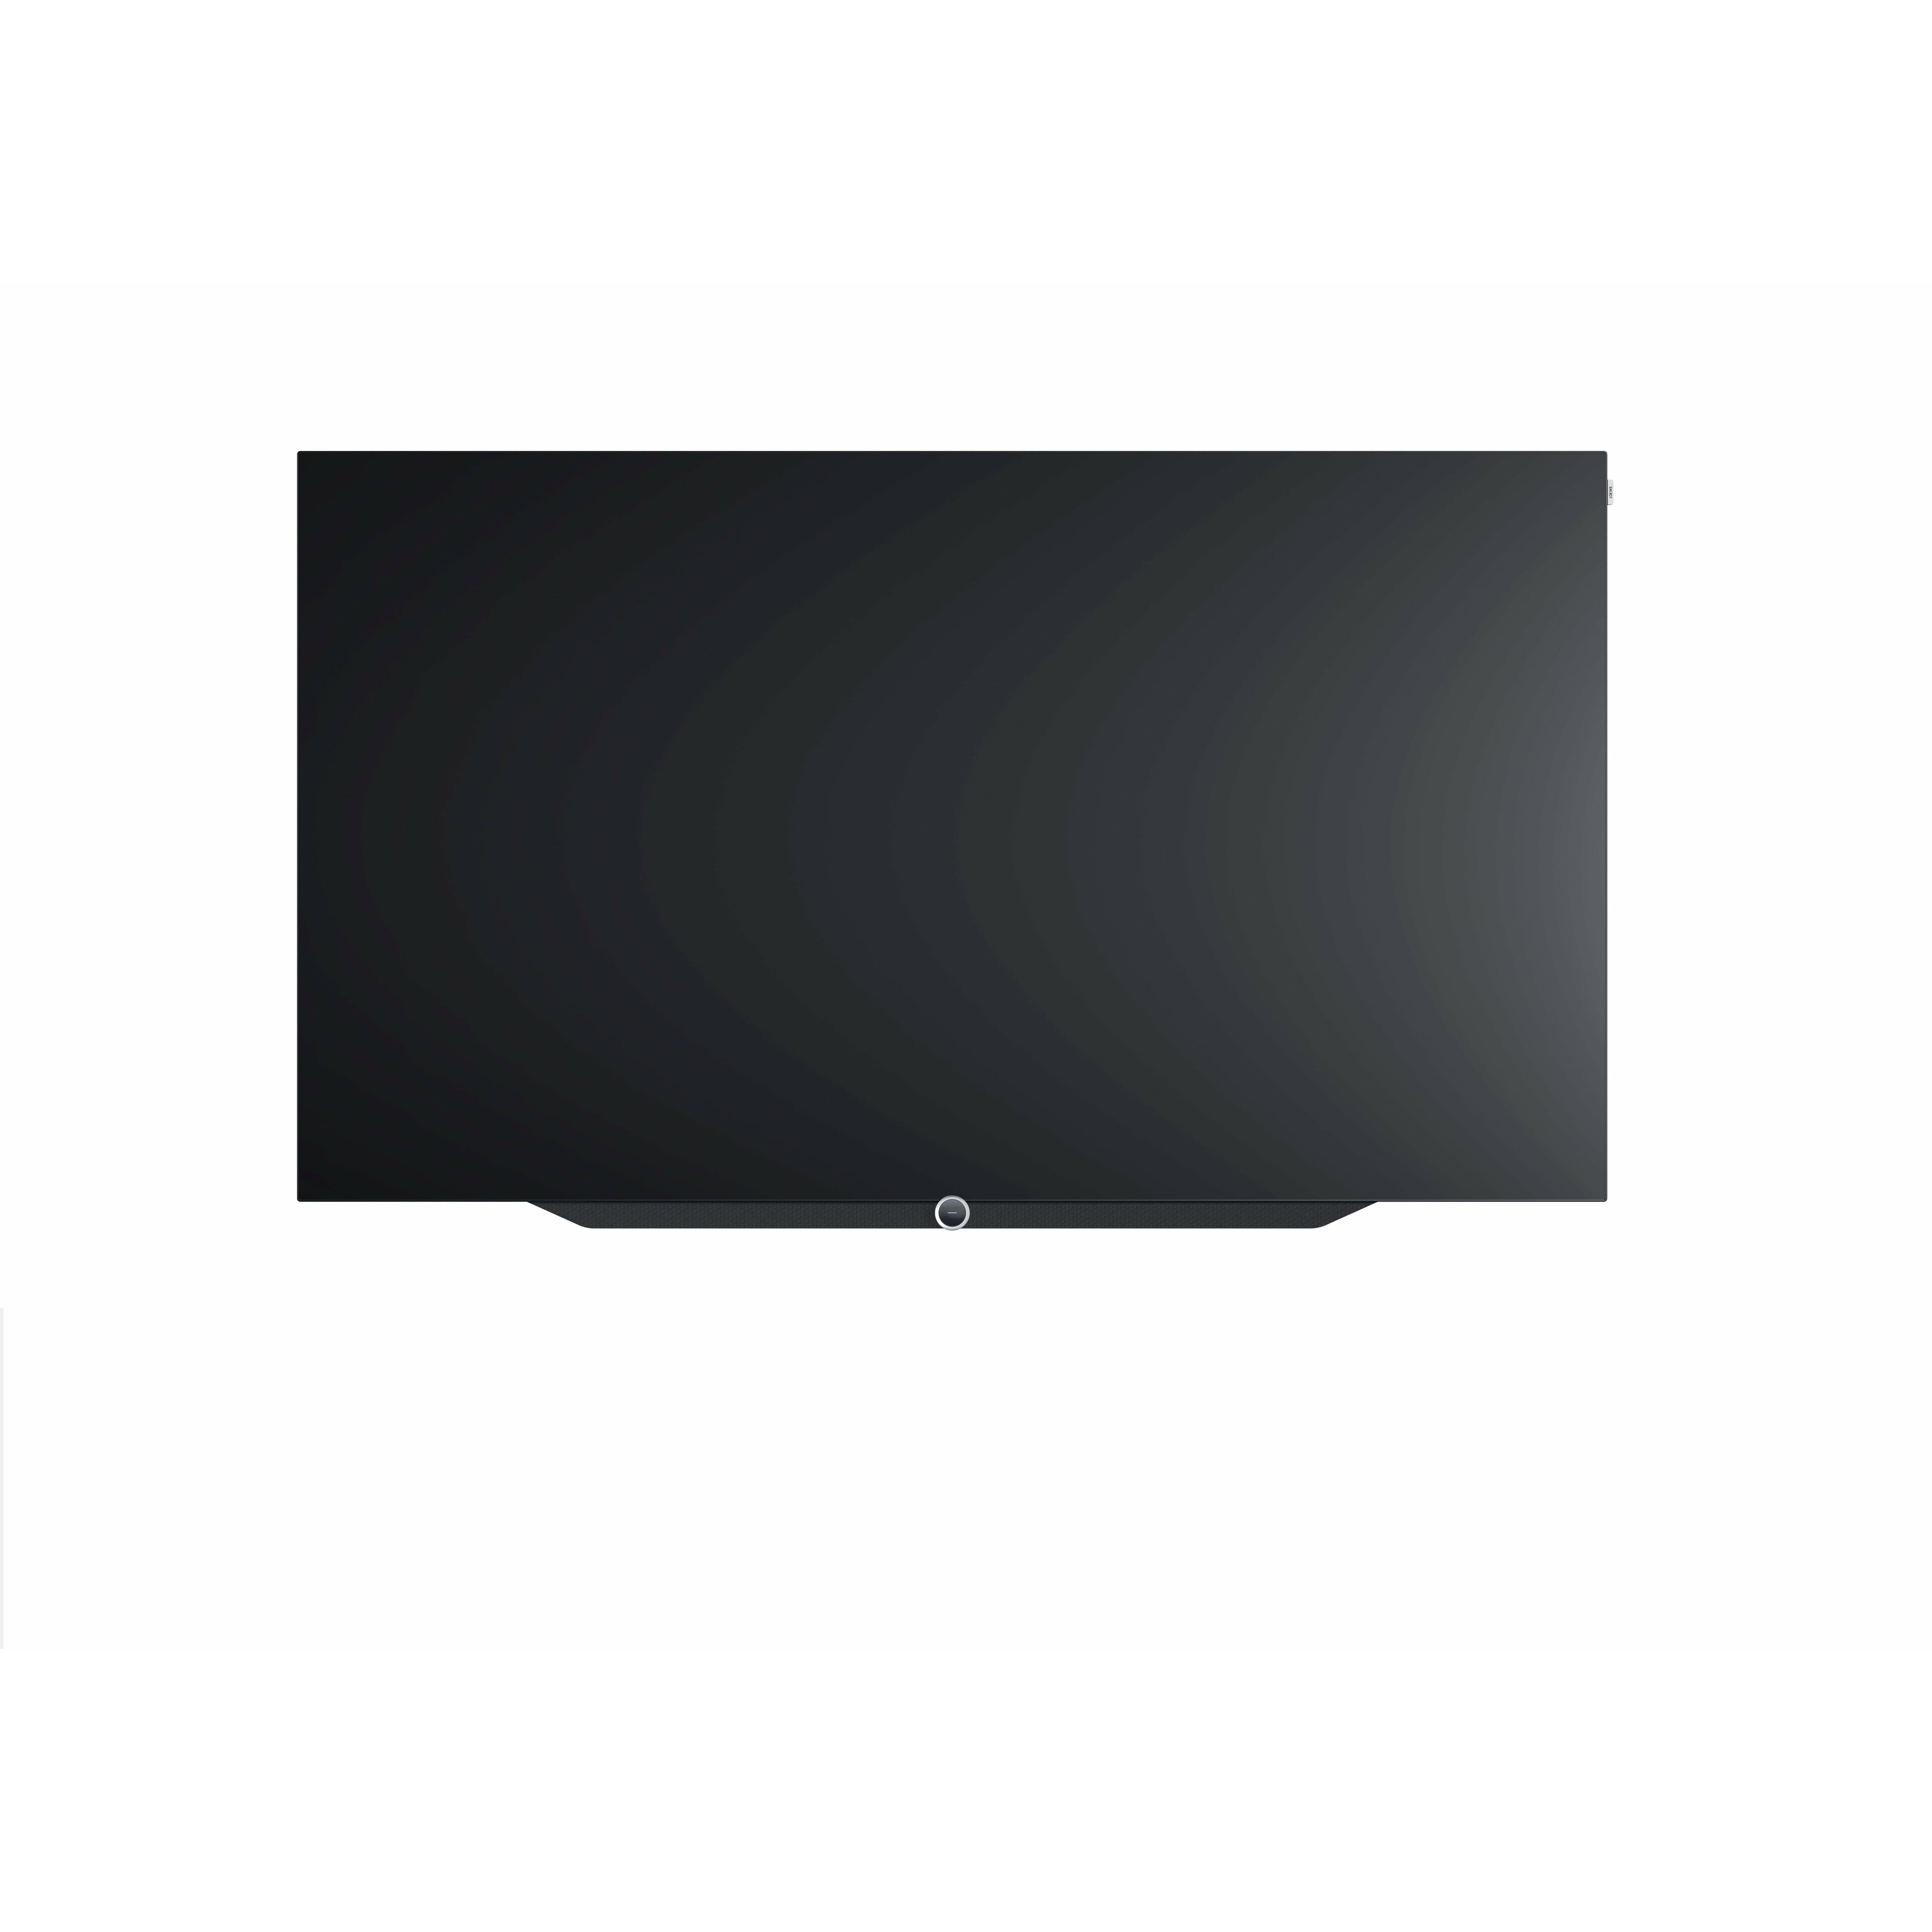 Loewe BILD s.77 O-LED 77" TV with Built-in Soundbar -Ex Demo